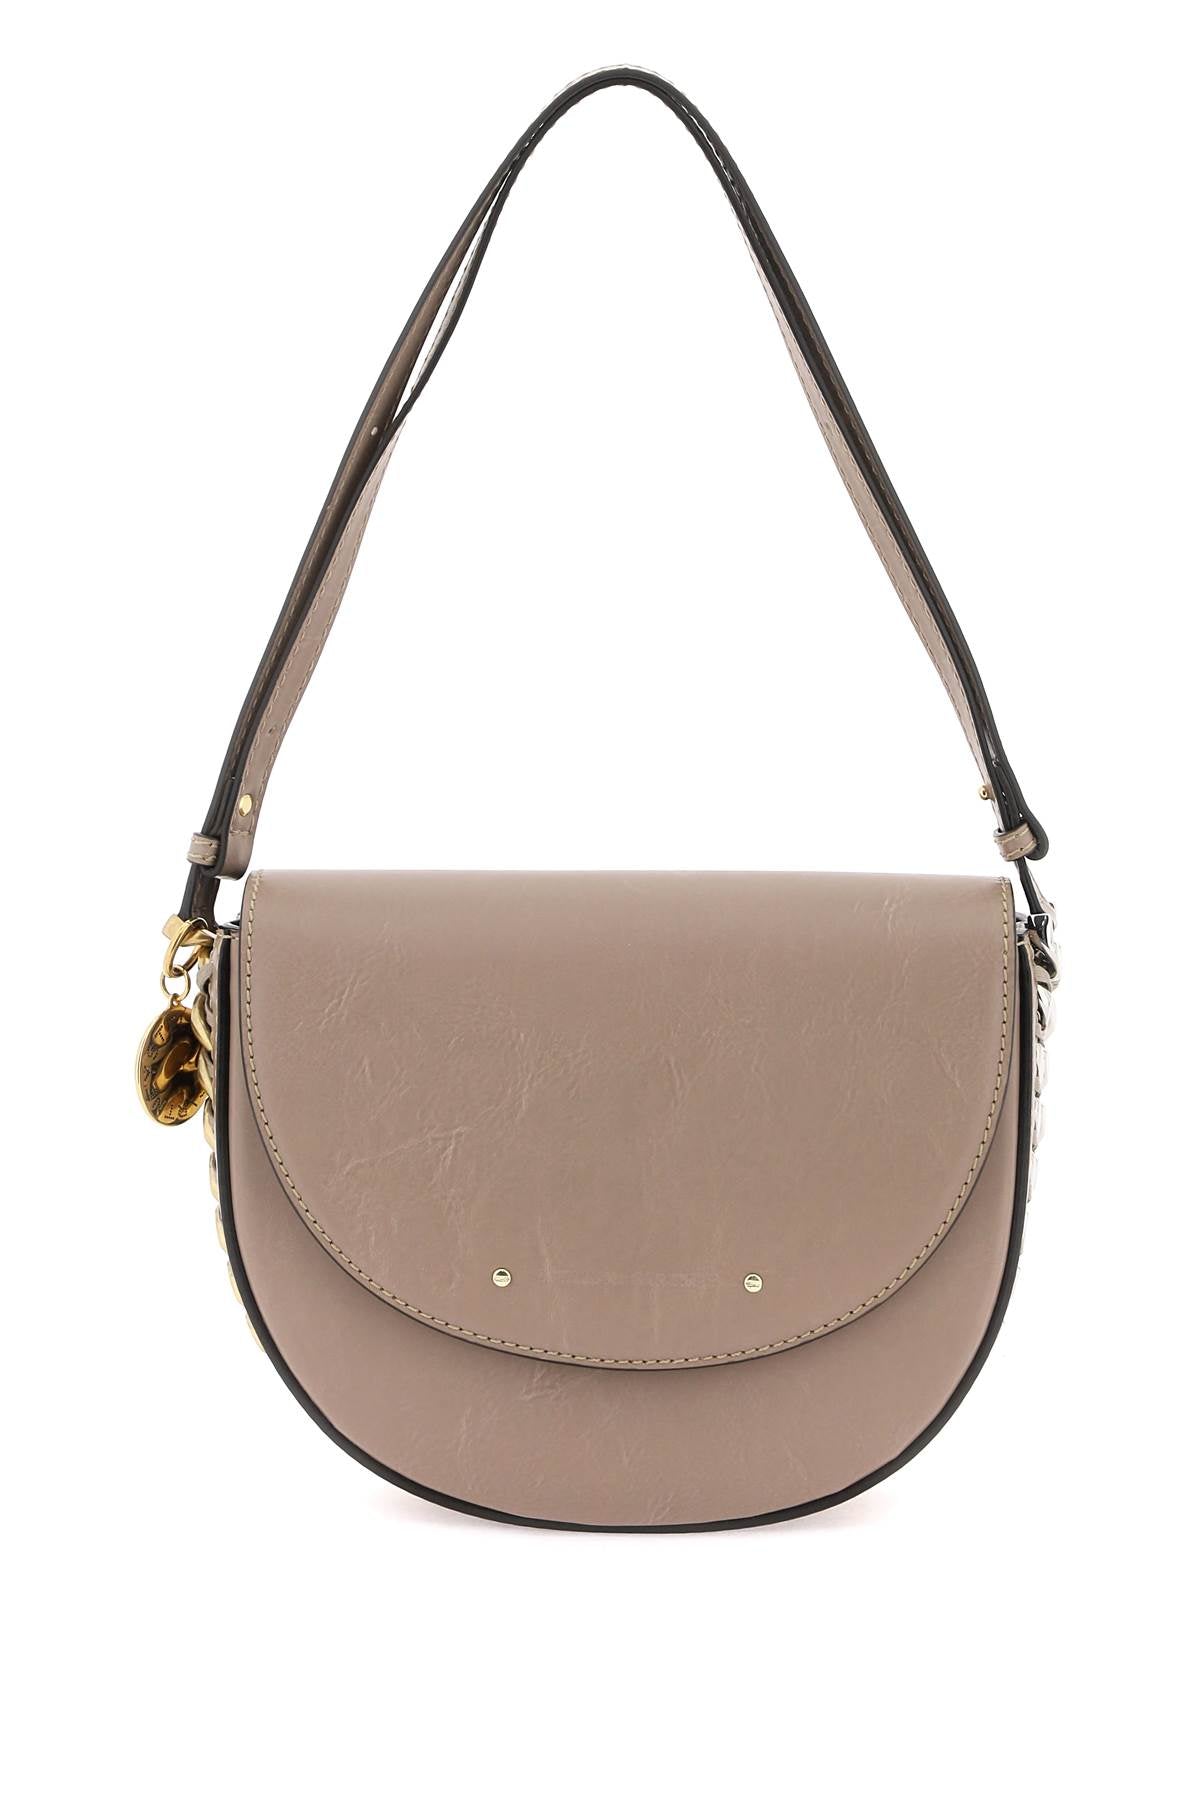 STELLA MCCARTNEY Stylish Frayme Shoulder Handbag for Women